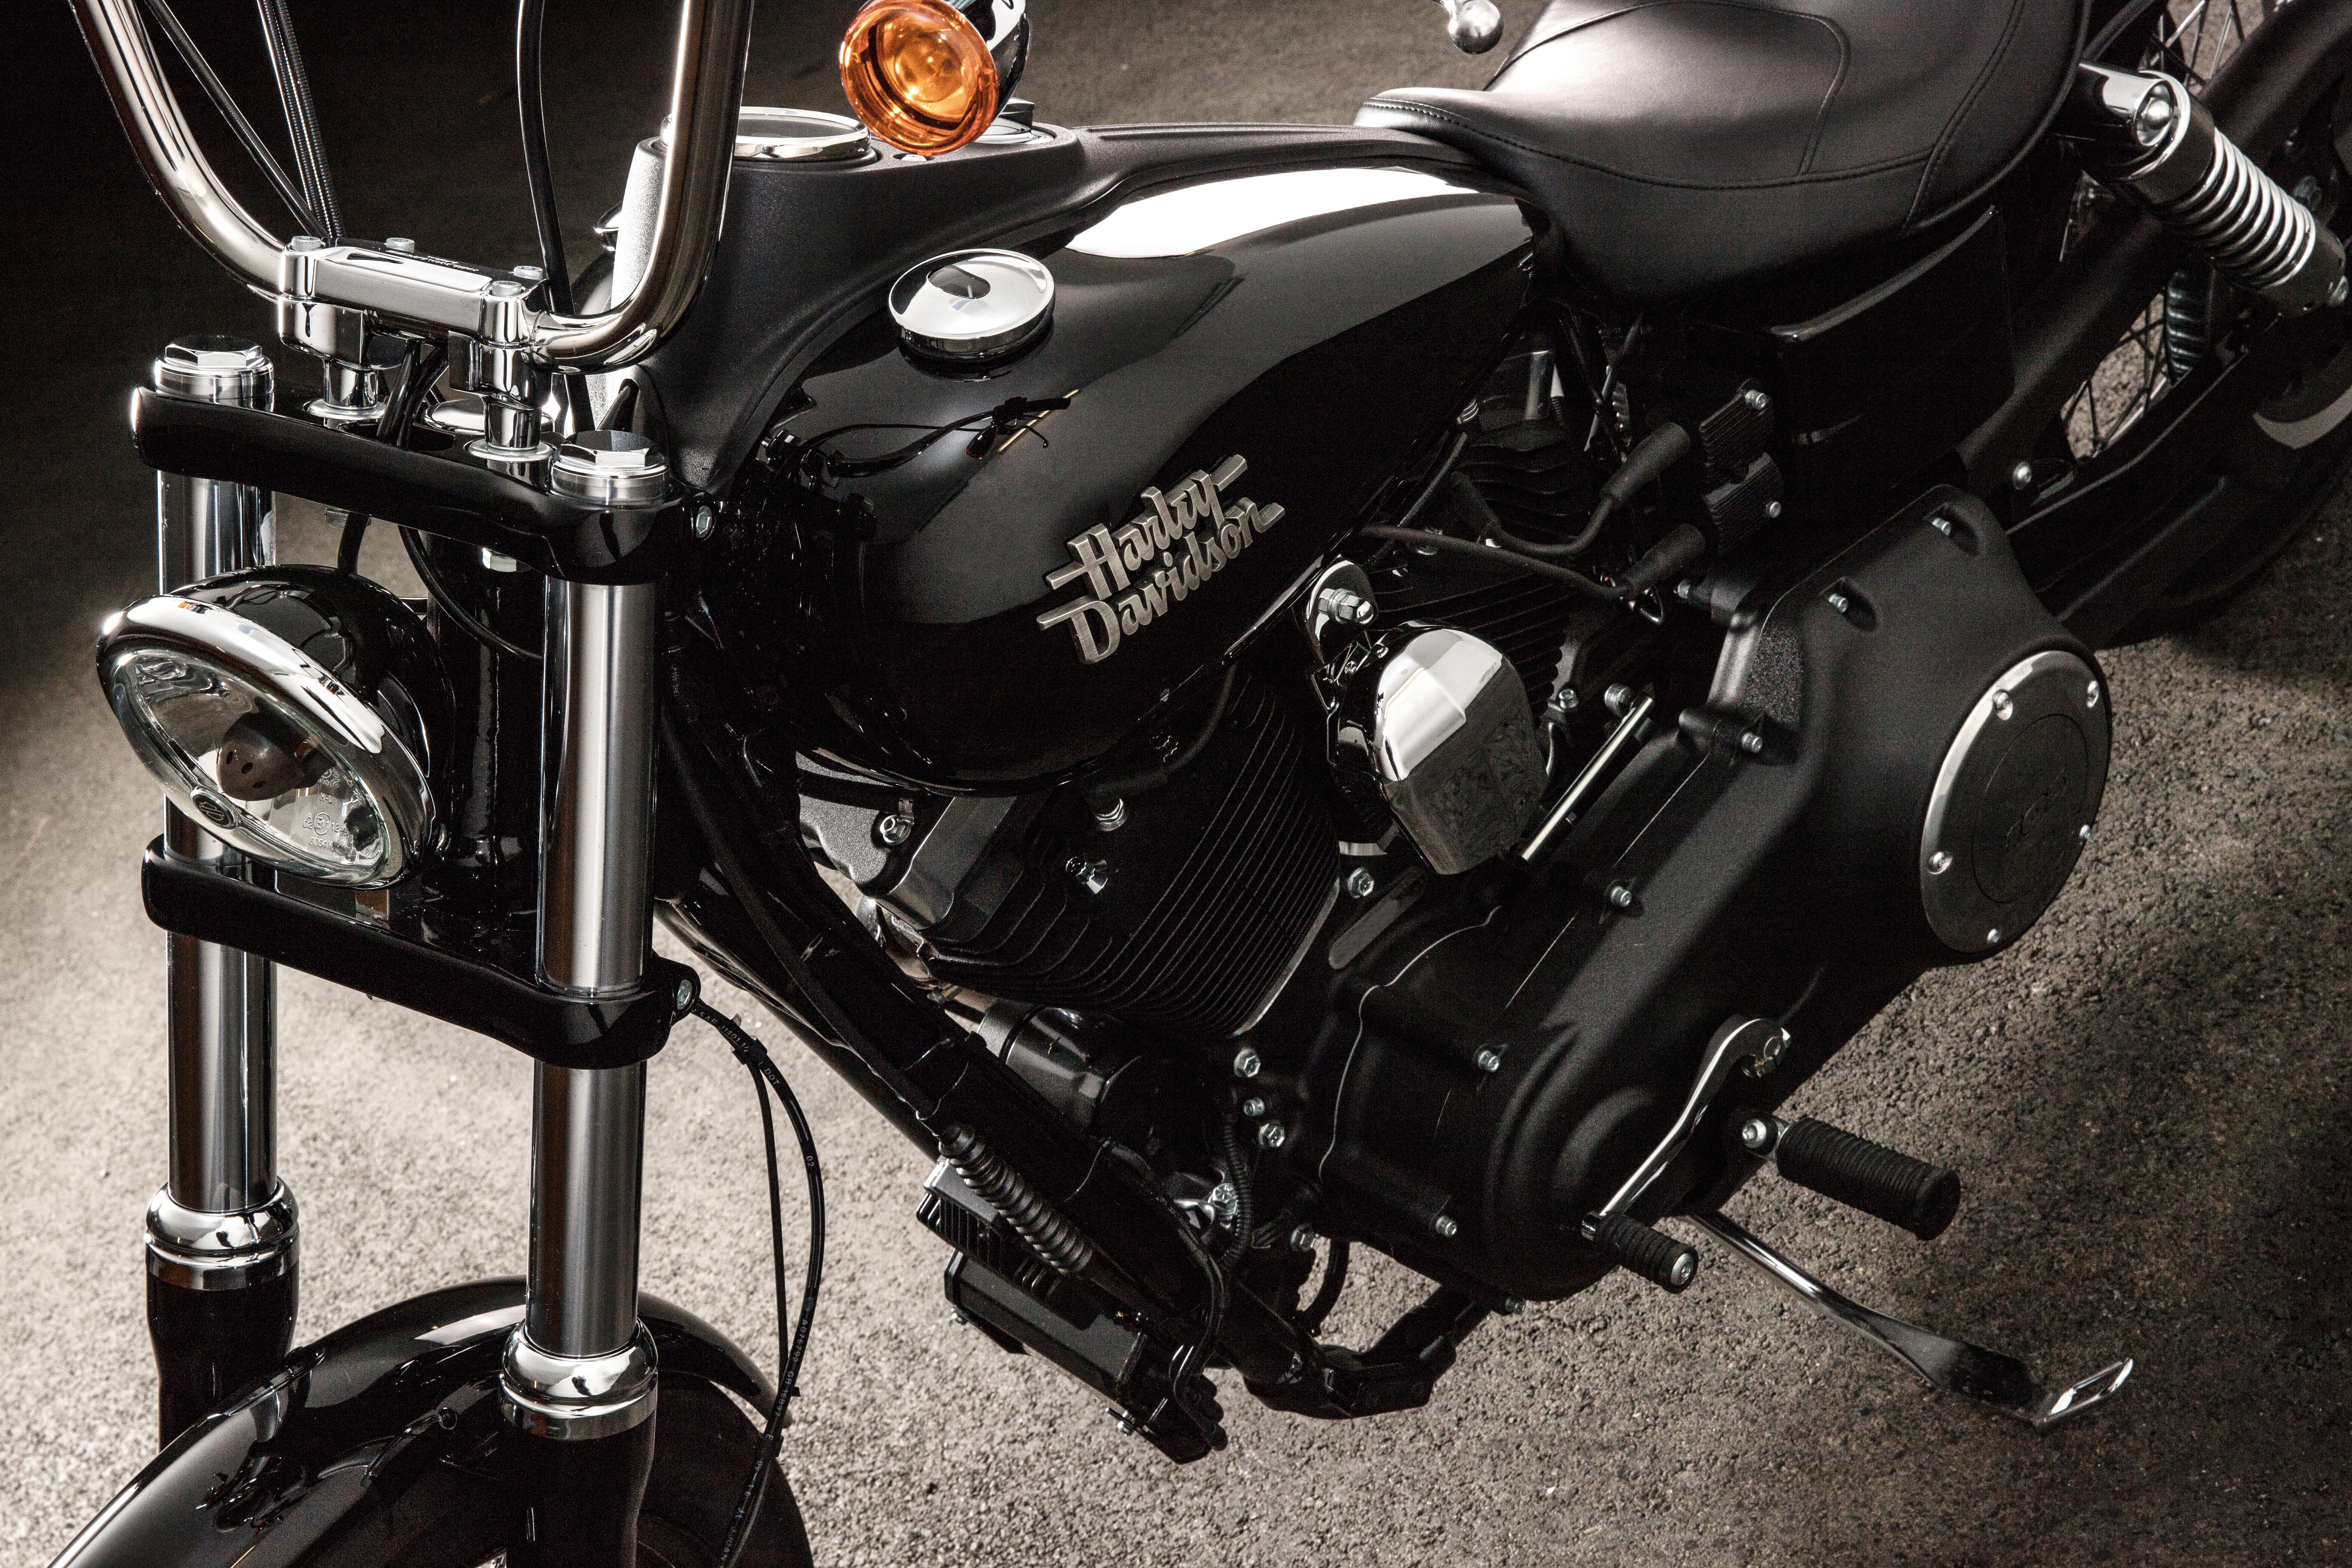 Popular Harley Davidson Motorcycle Models Best All Round Harley Bike